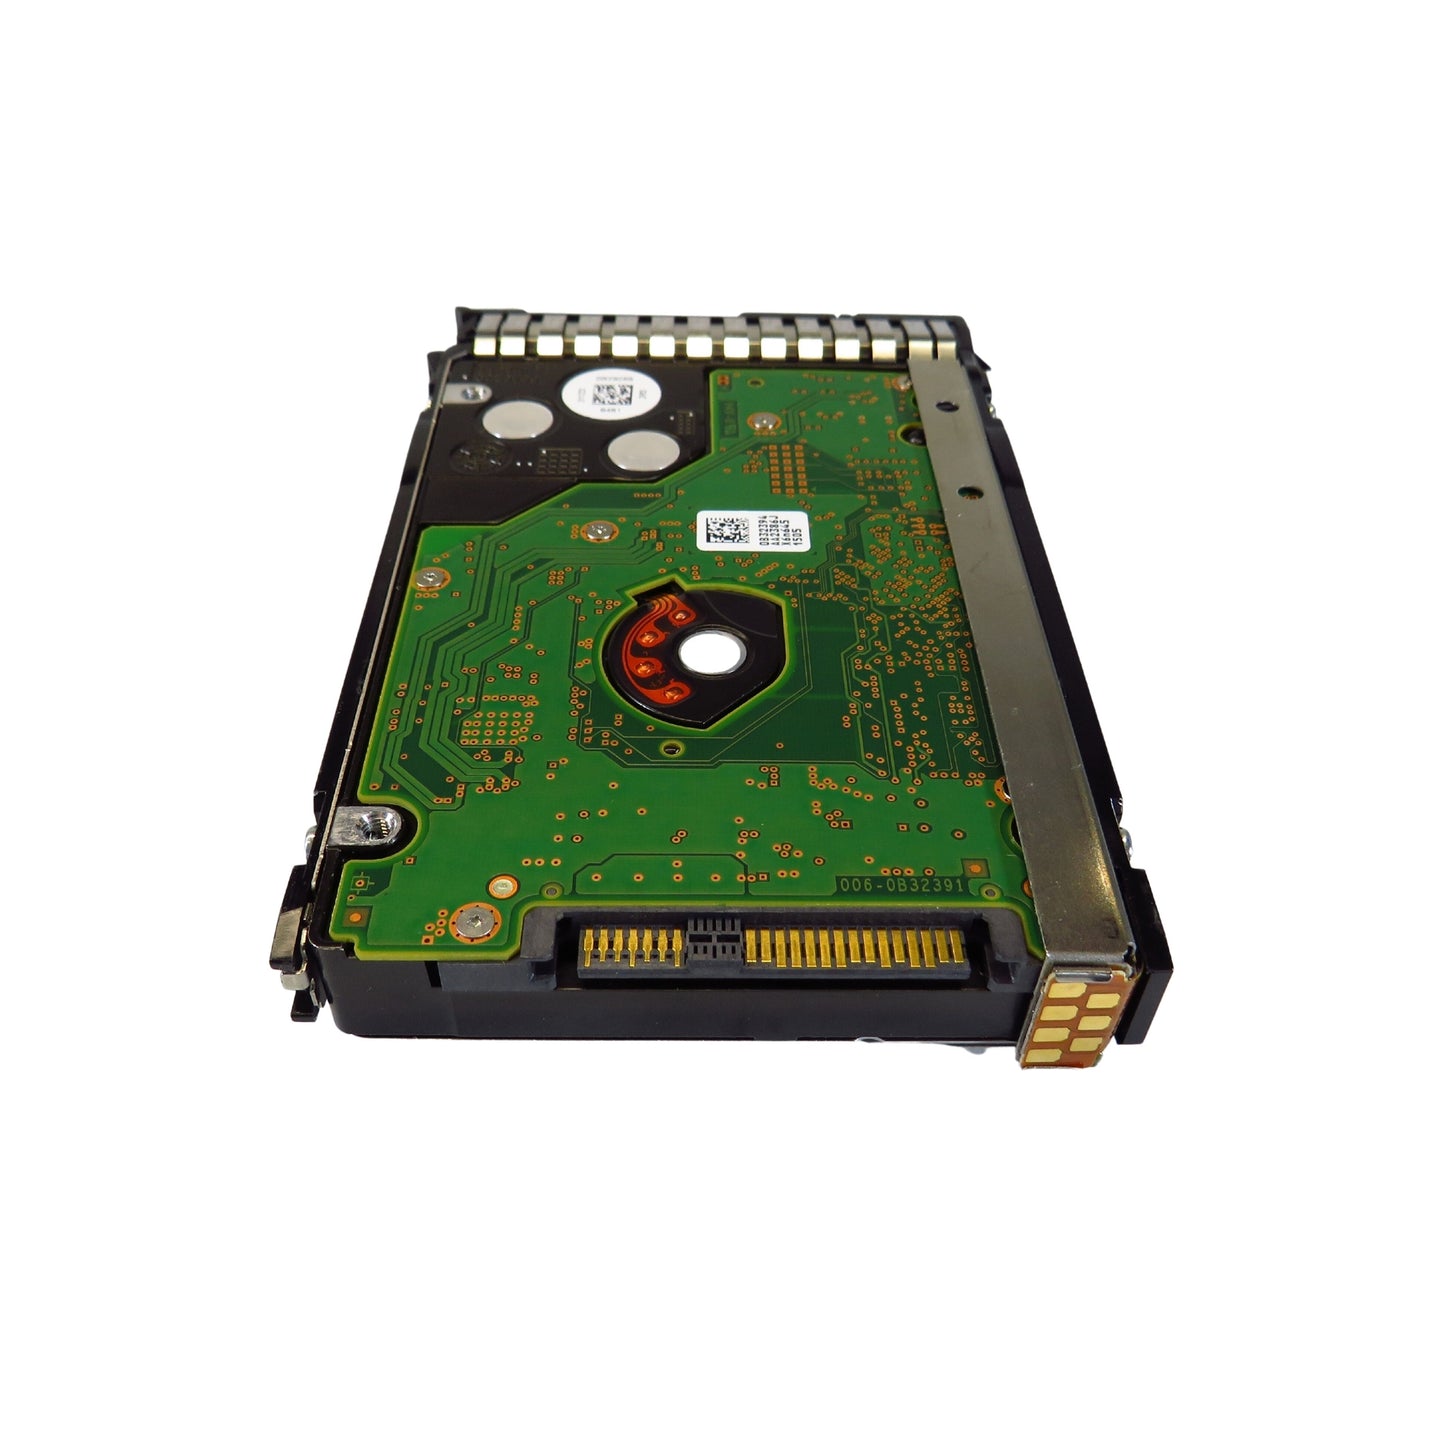 HP 781578-001 1.2TB 10K RPM 2.5" SAS 12Gbps SC ENT HDD Hard Drive (Refurbished)